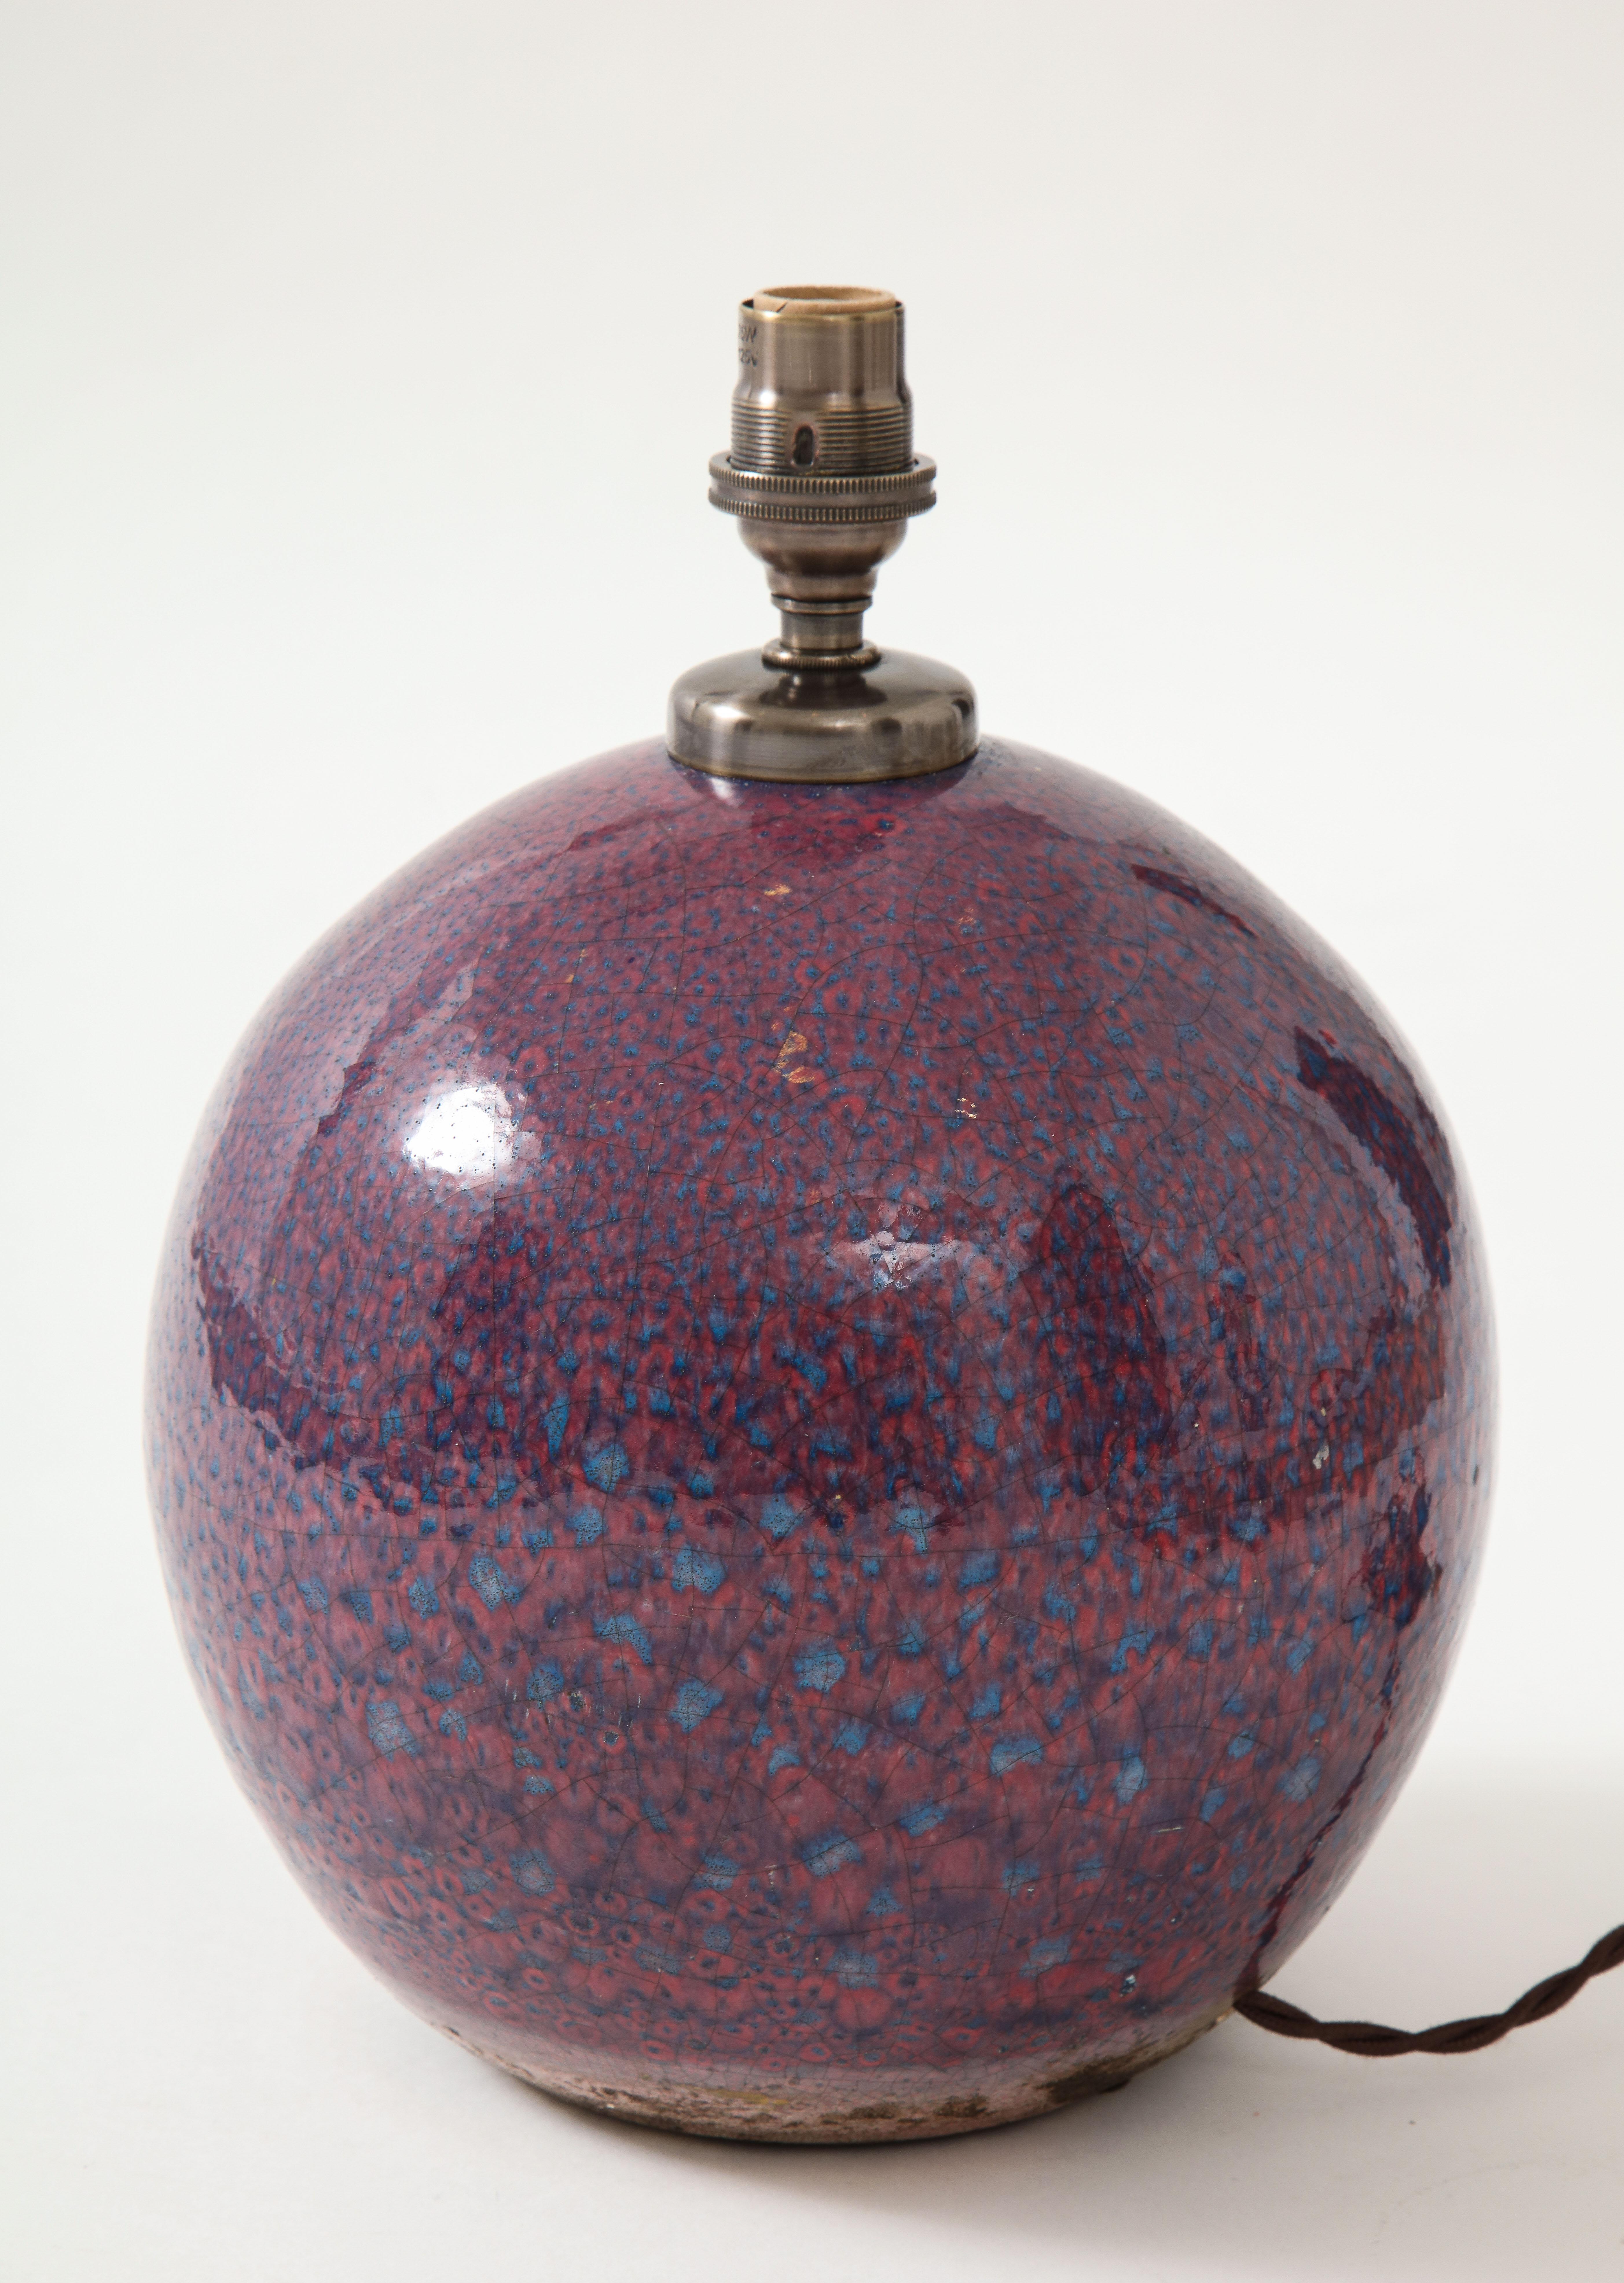 Glazed Jean Besnard Ceramic Purple Sphere Lamp France circa 1935, Signed ‘JB’ 'France'